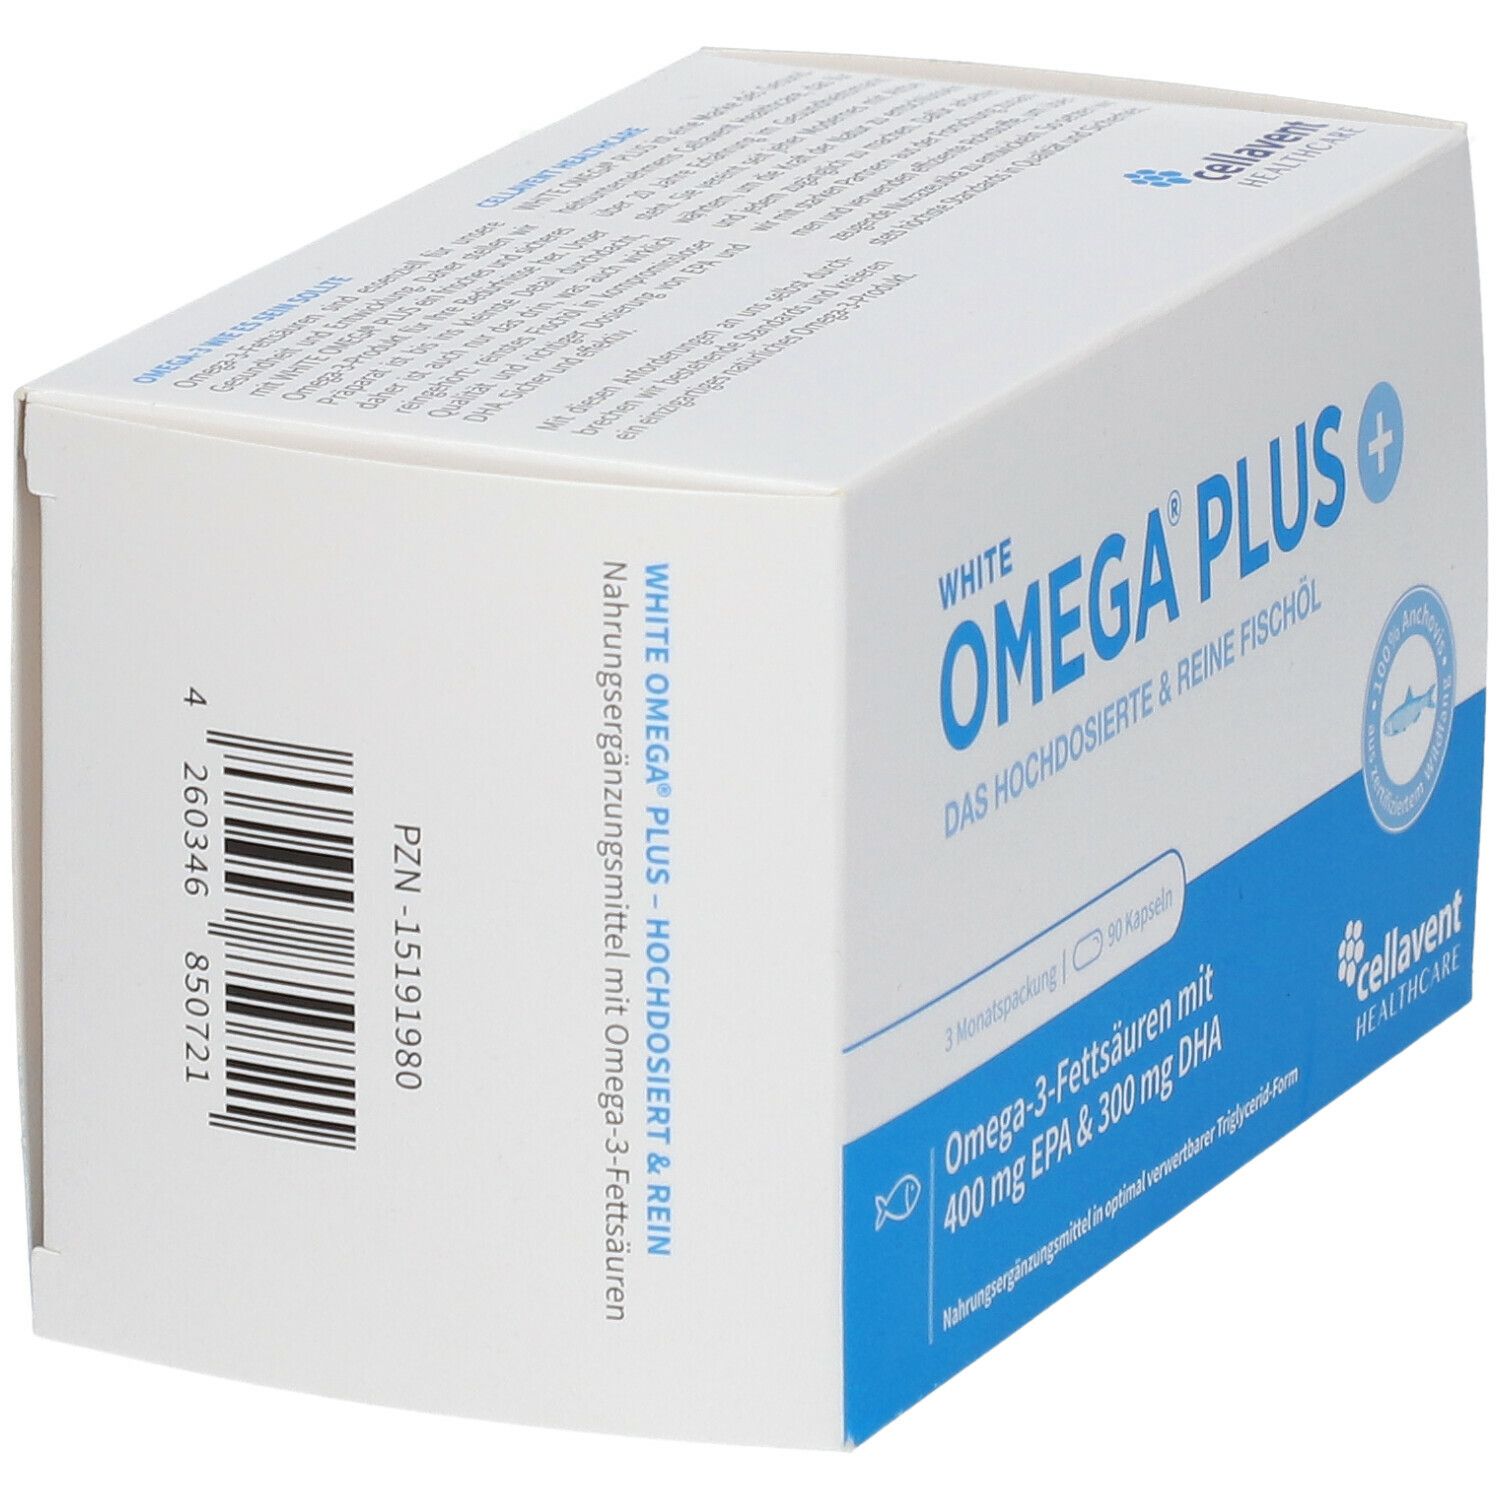 White Omega® PLUS – Reine Omega-3-Fischöl-Kapseln